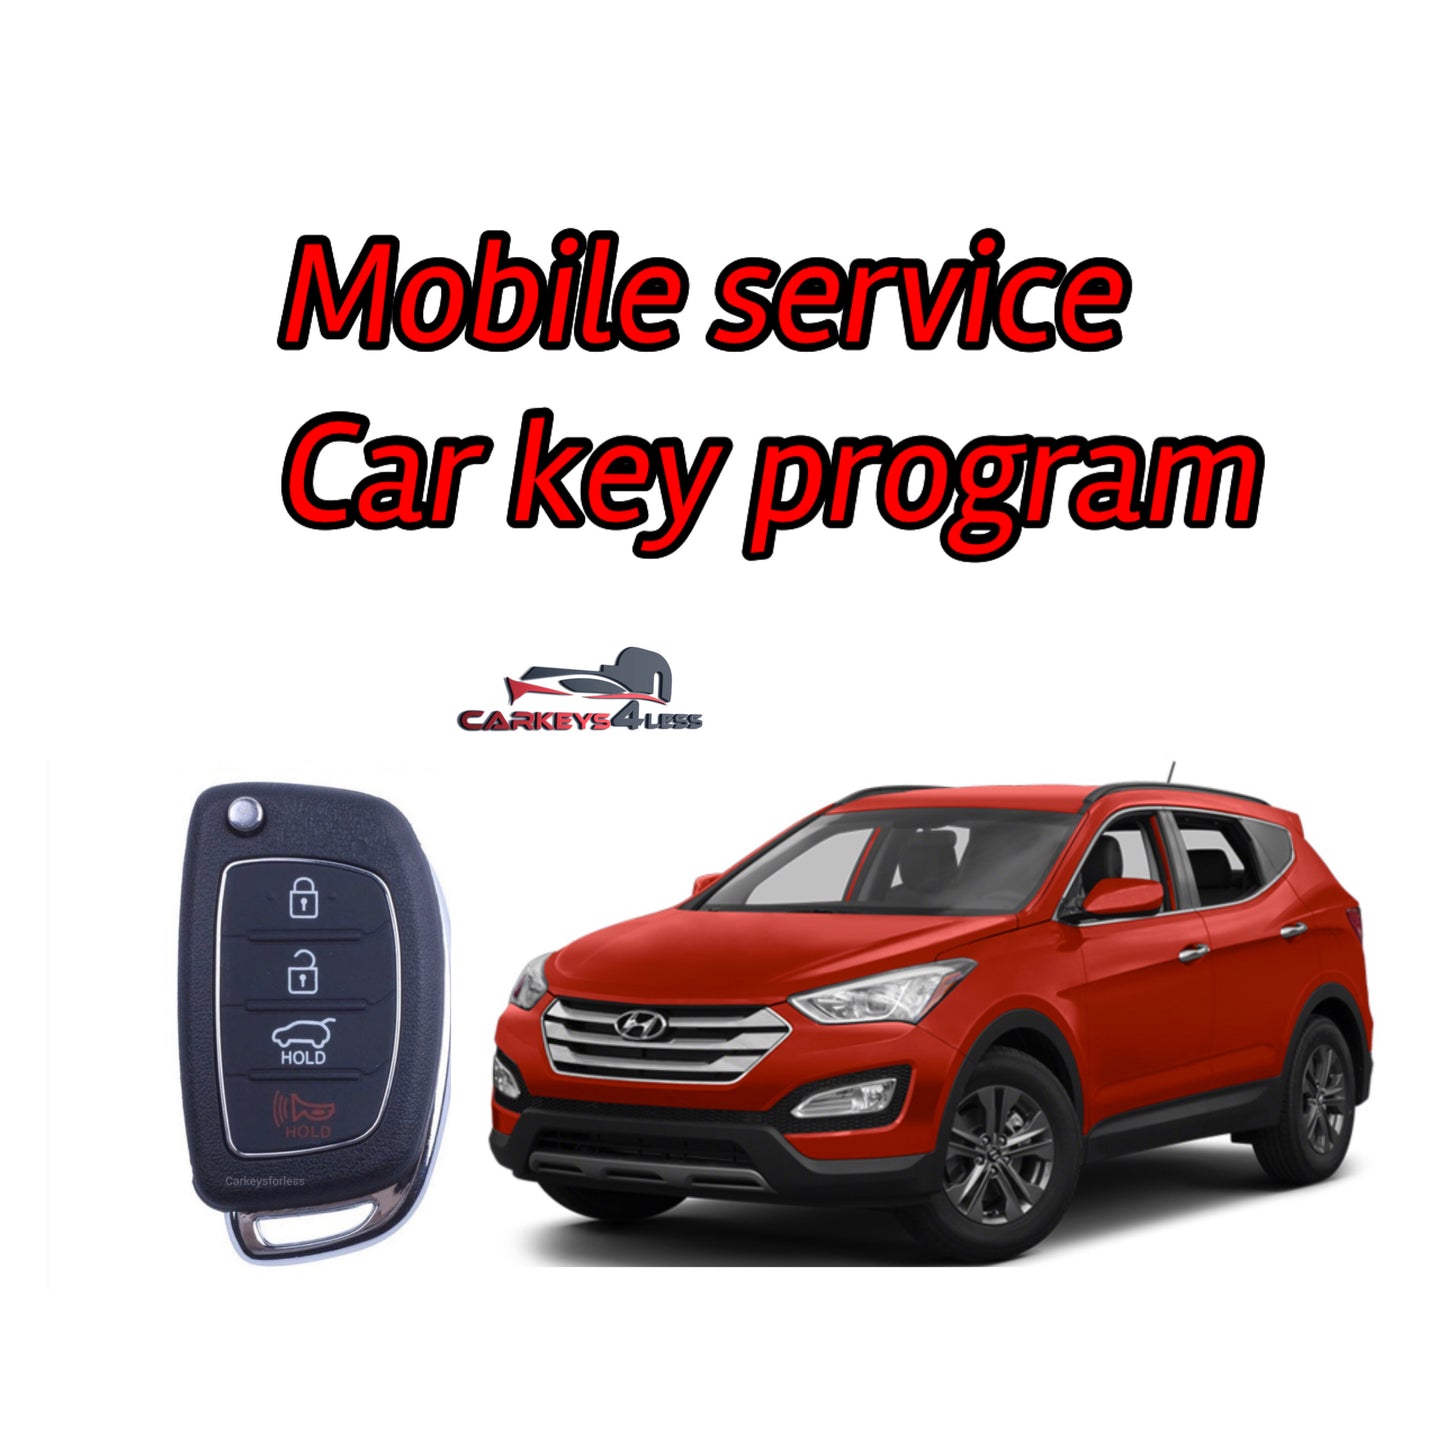 Mobile service car key program for Hyundai